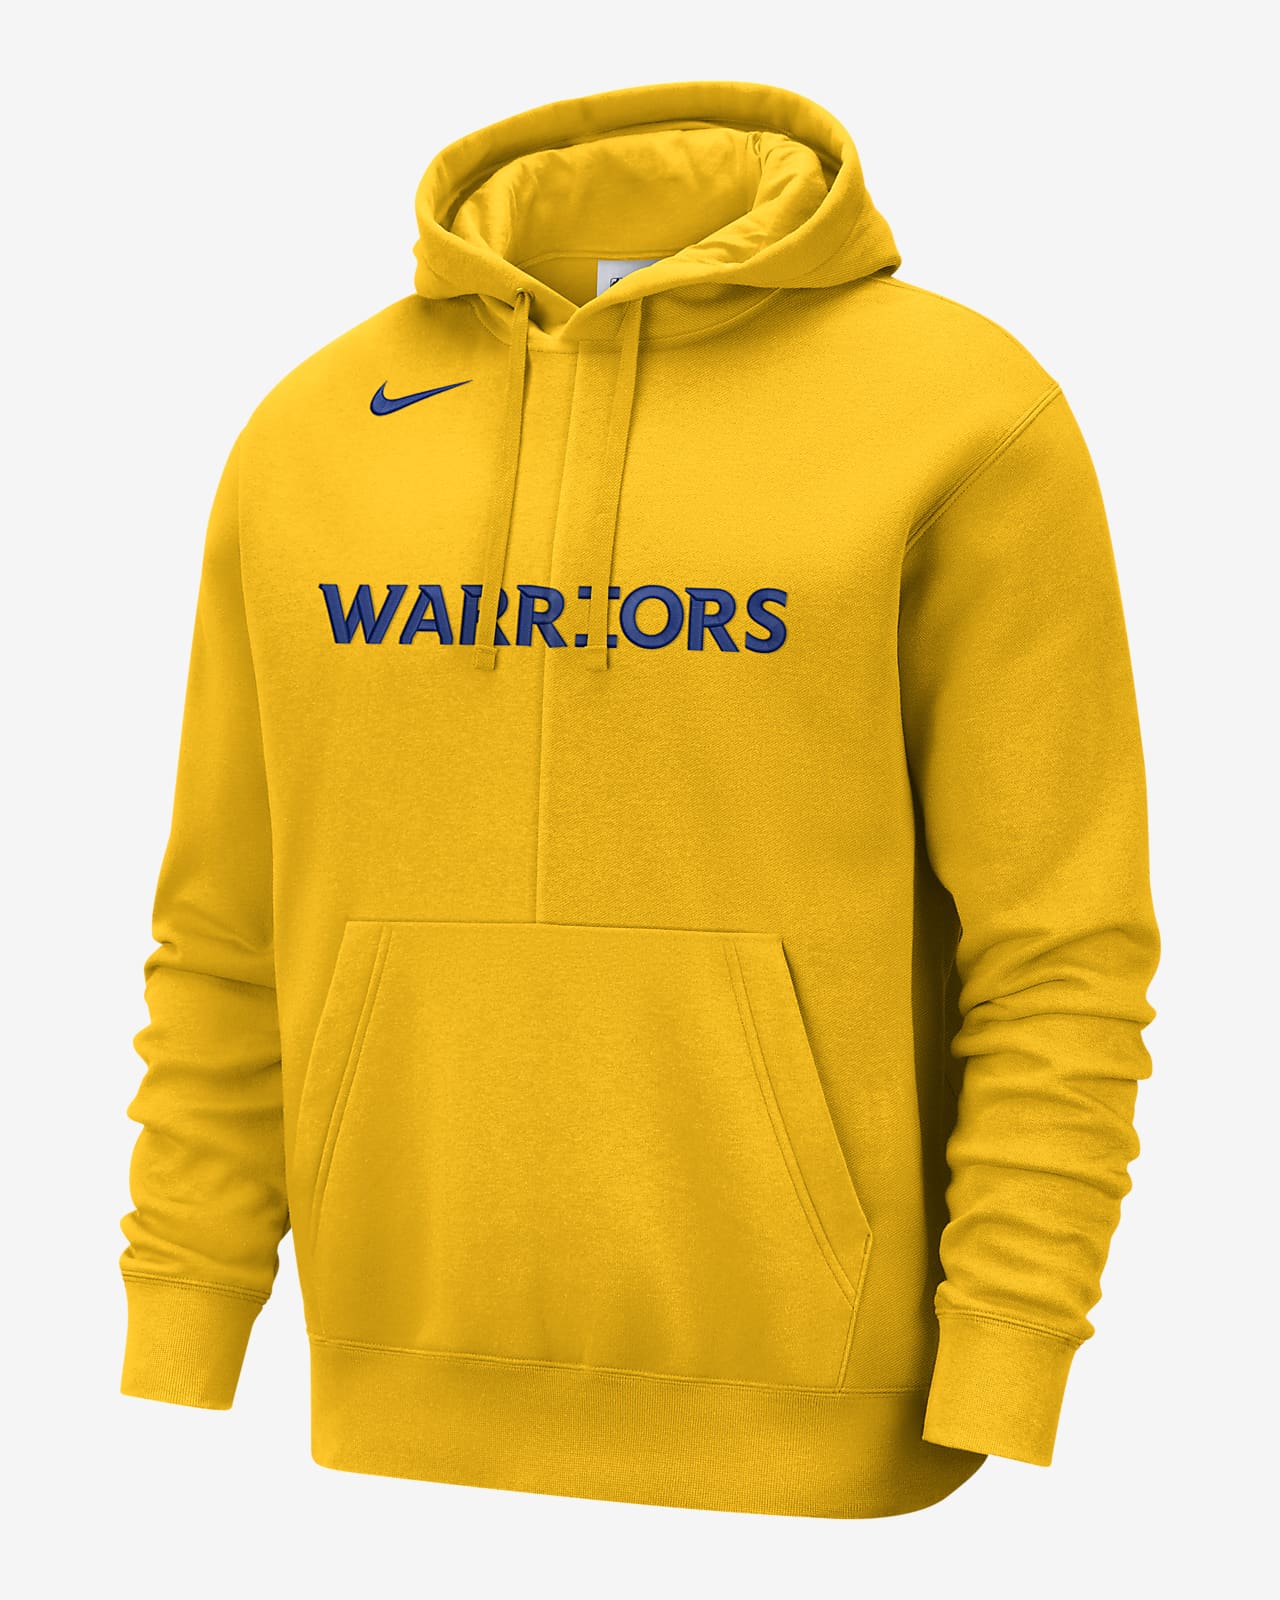 golden state warriors sweater